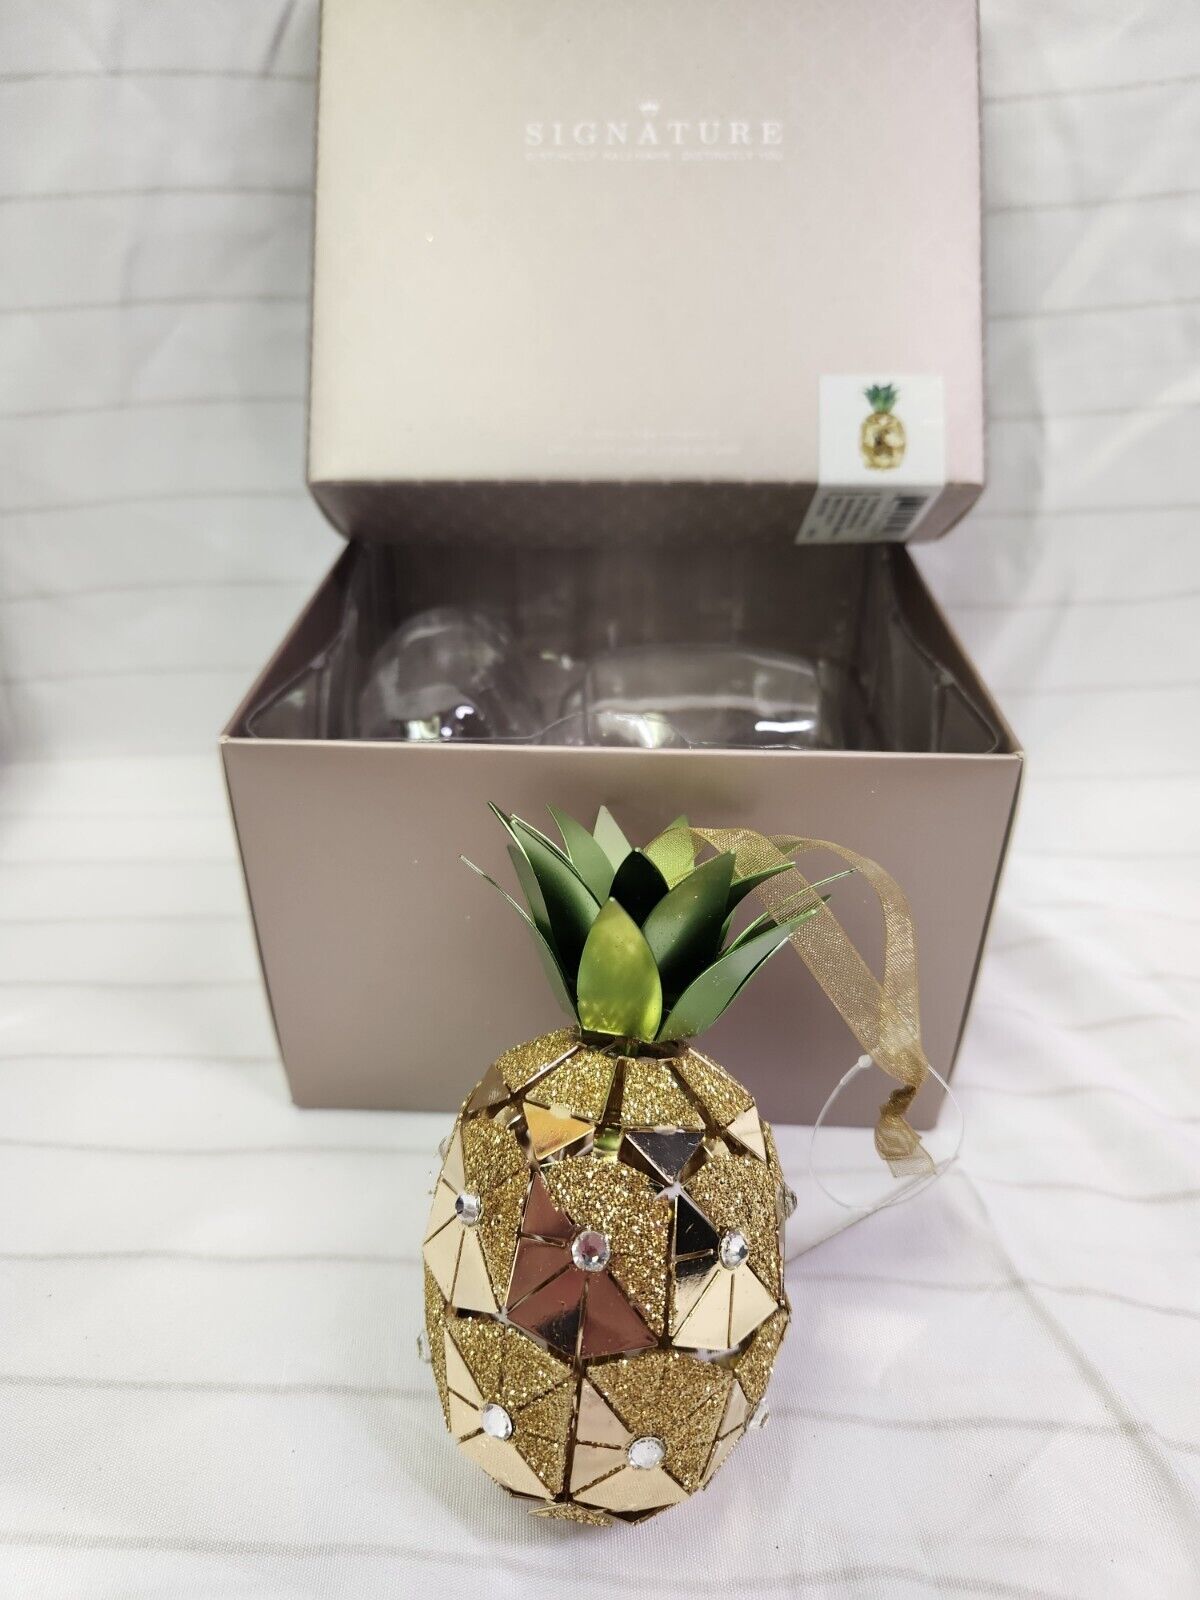 Hallmark Signature Pineapple Ornament New w/ Box HDL2021